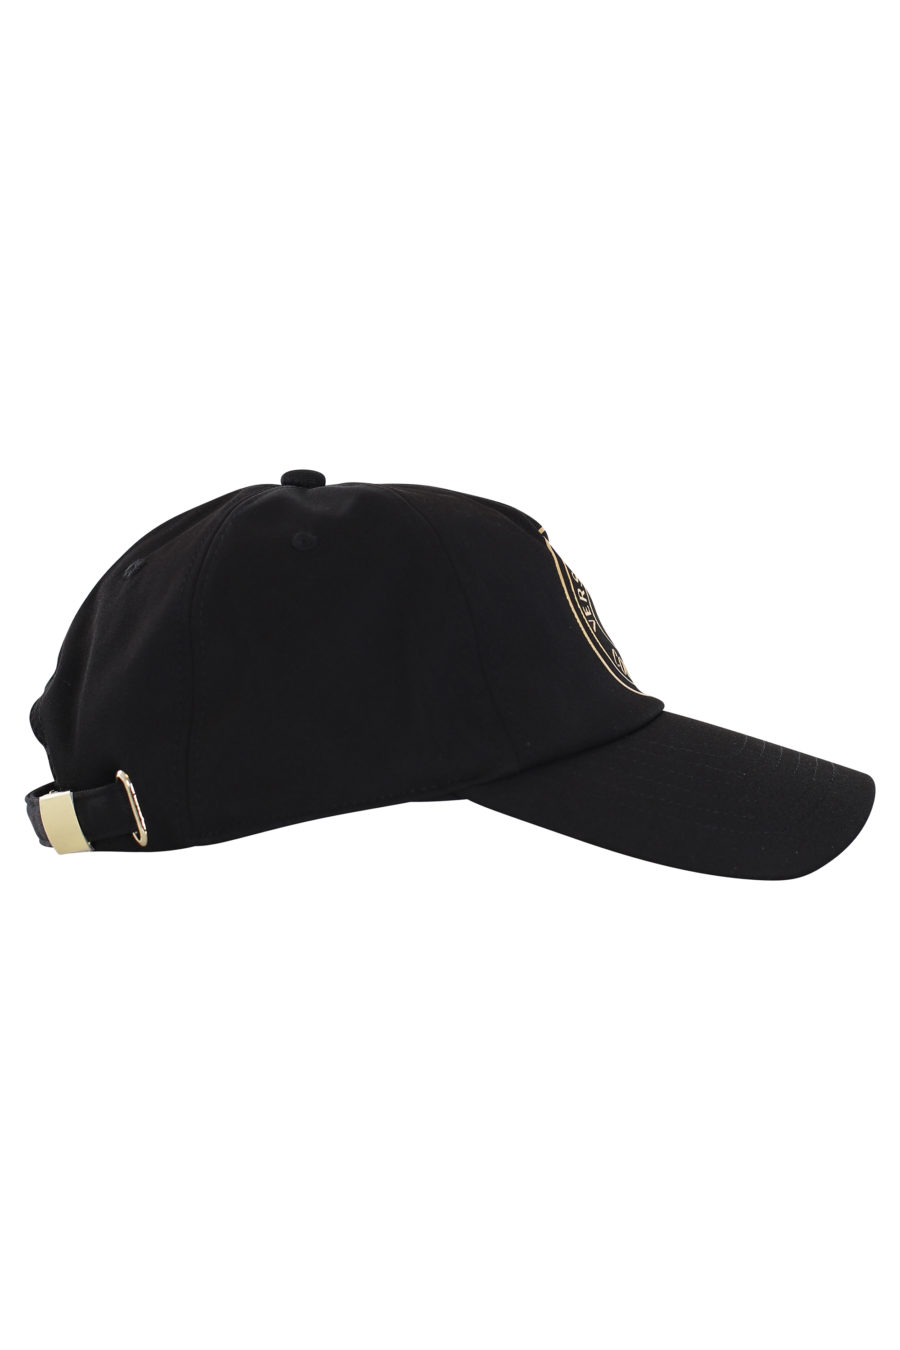 Black cap with round gold logo - IMG 0139